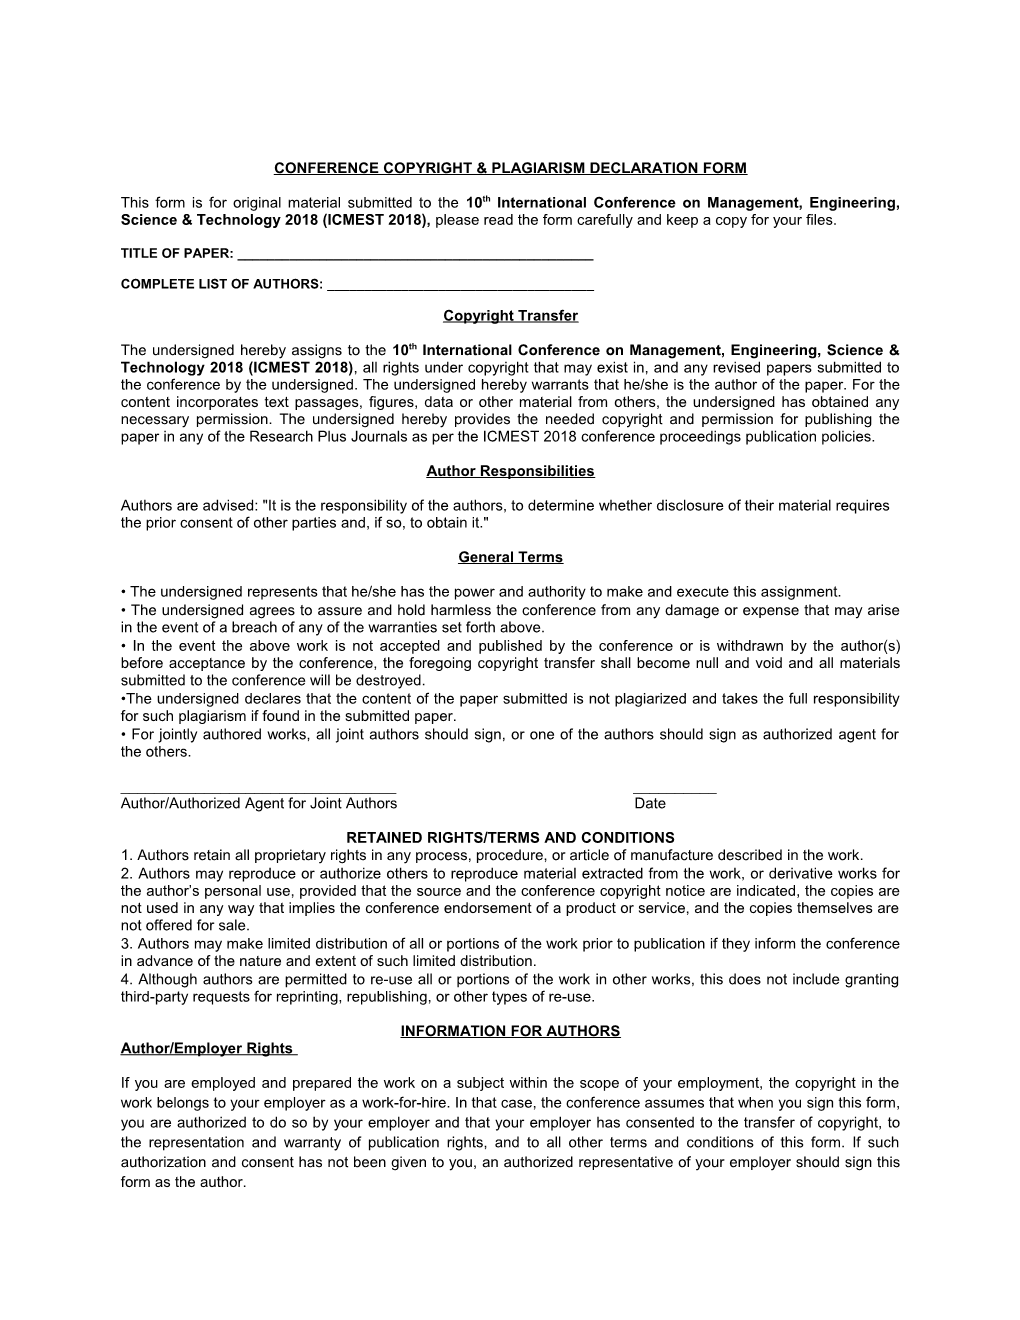 Conference Copyright & Plagiarism Declaration Form